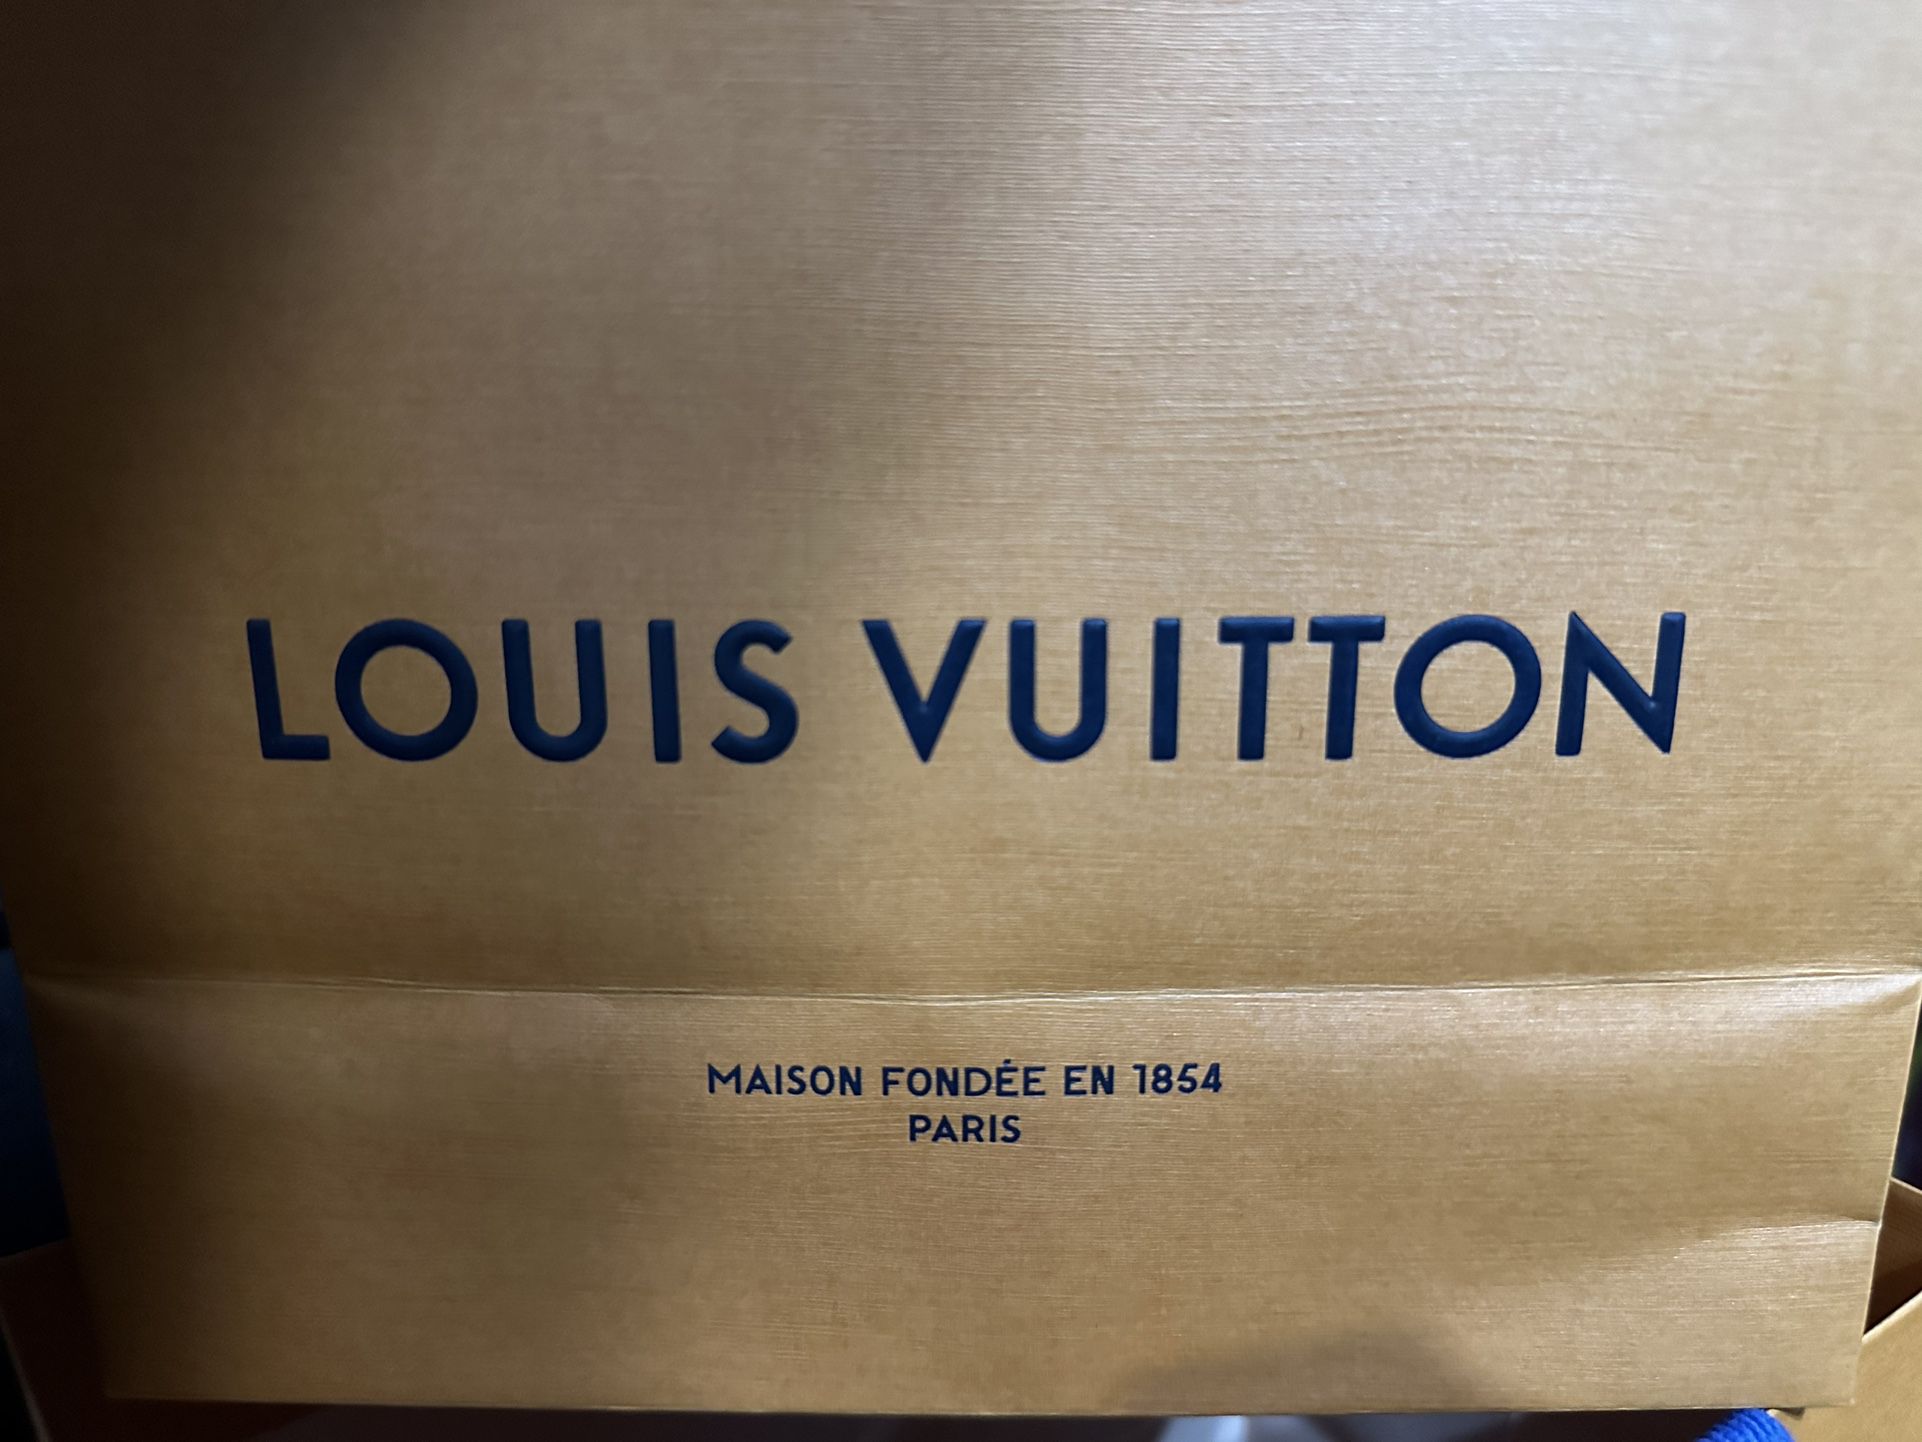 Louis Vuitton Monogram Bracelet for Sale in Burbank, CA - OfferUp